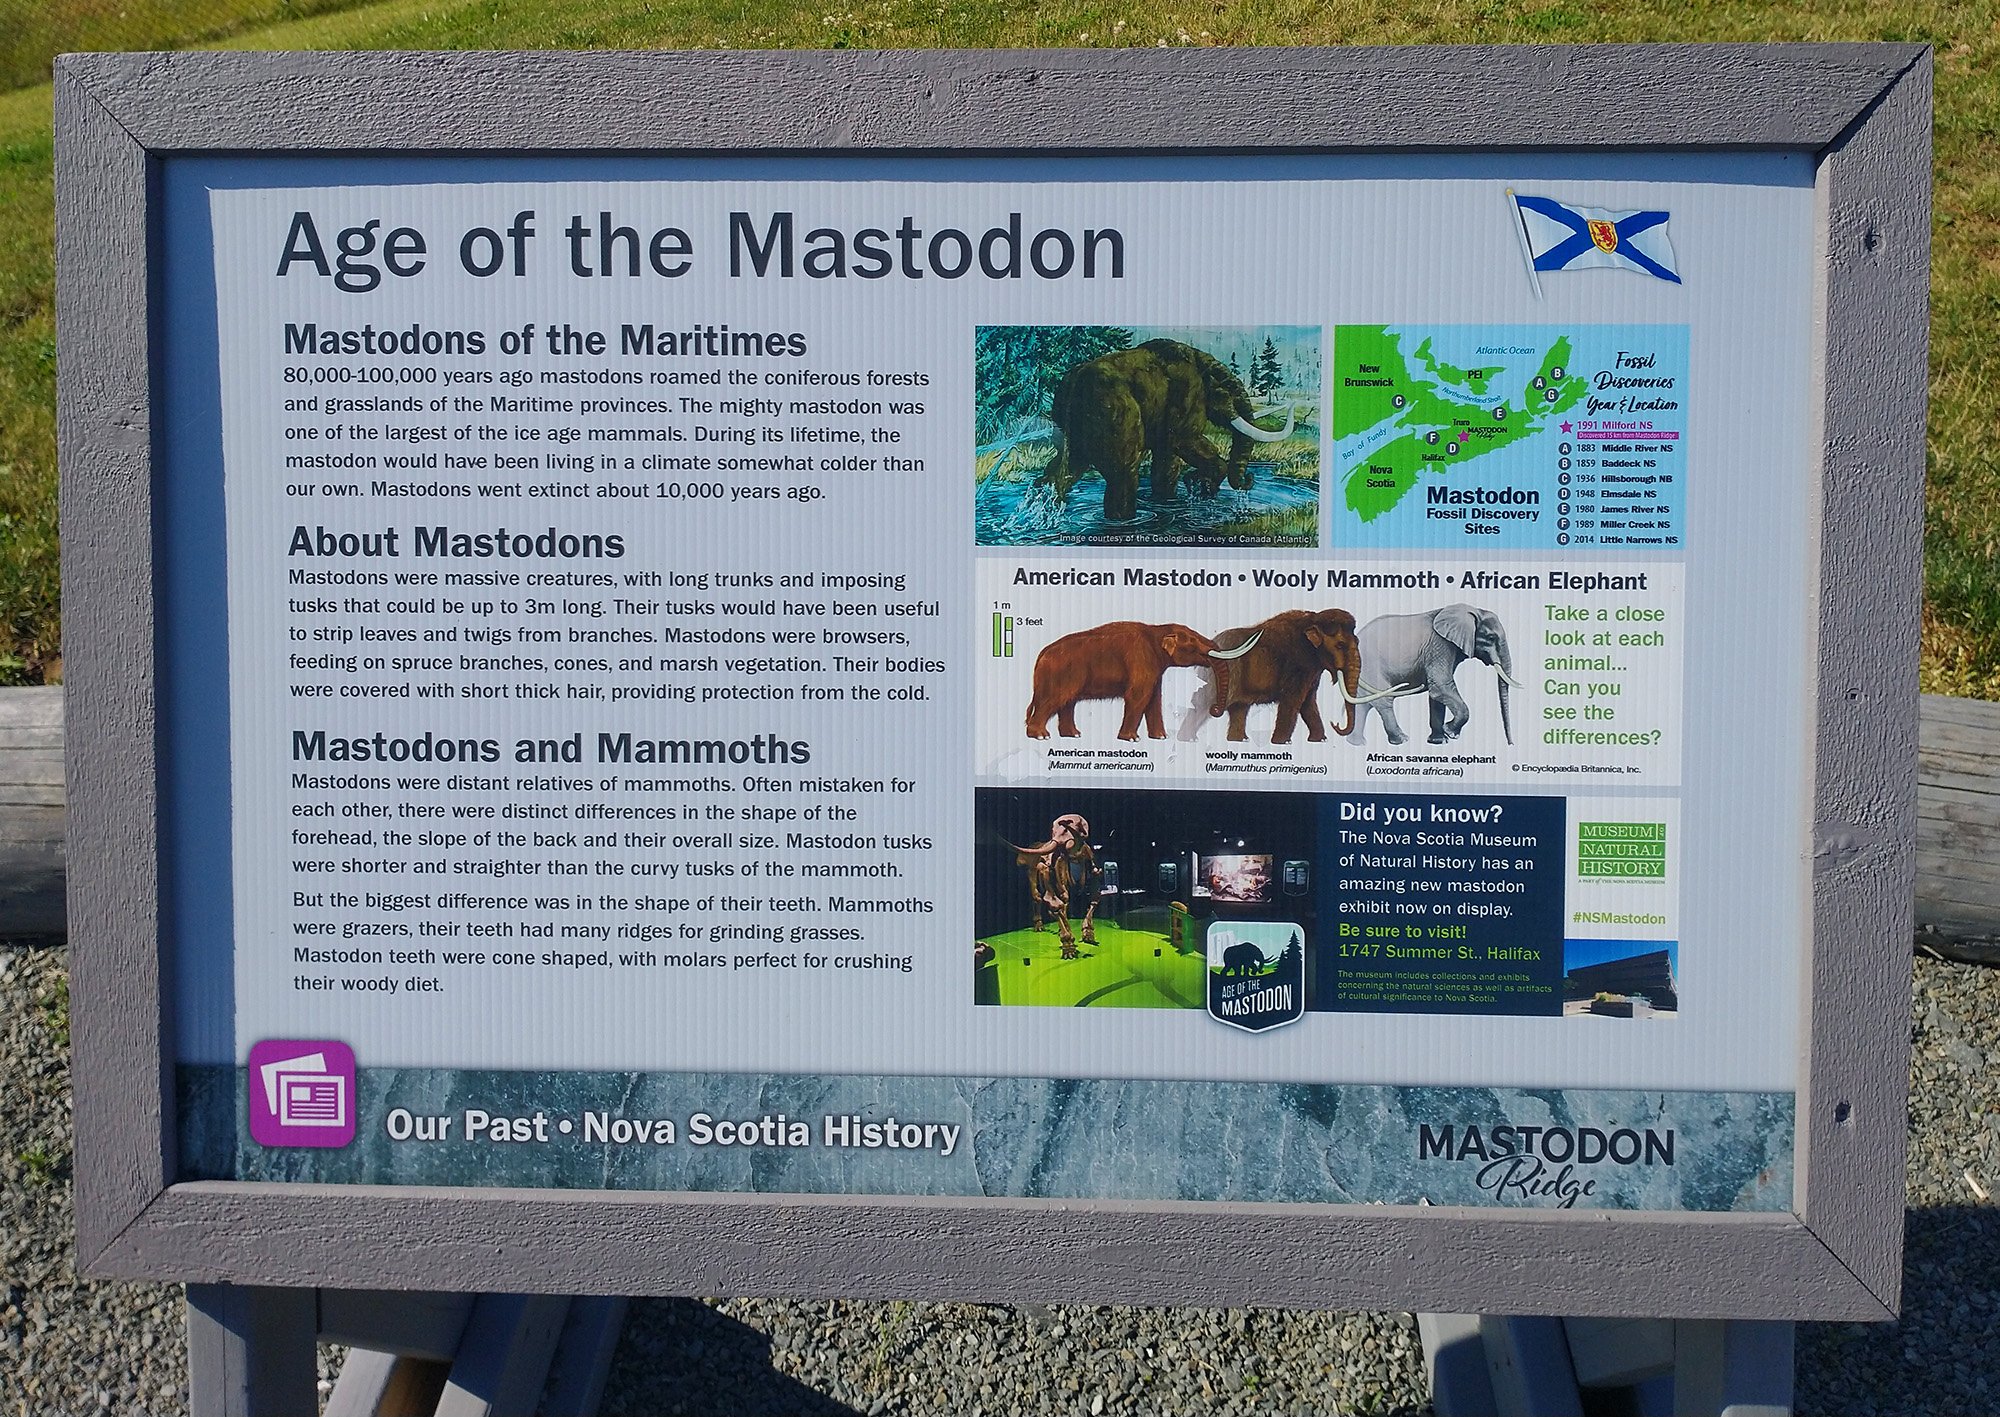 Anyway, Mastodons were pretty big. Imagine the ribs. Hmmm